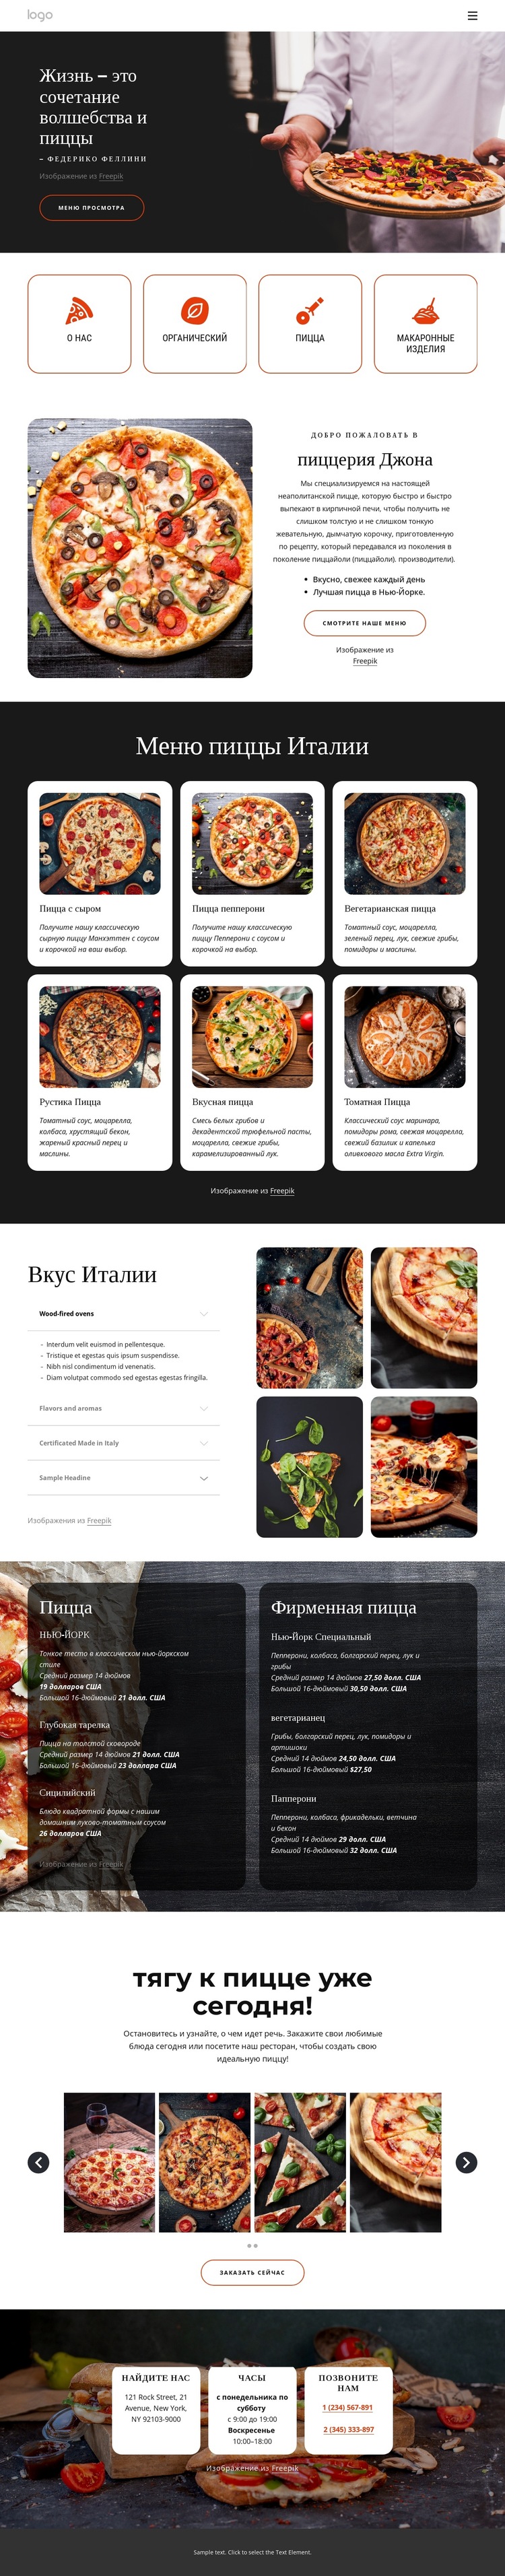 Пиццерия для всей семьи Шаблон веб-сайта